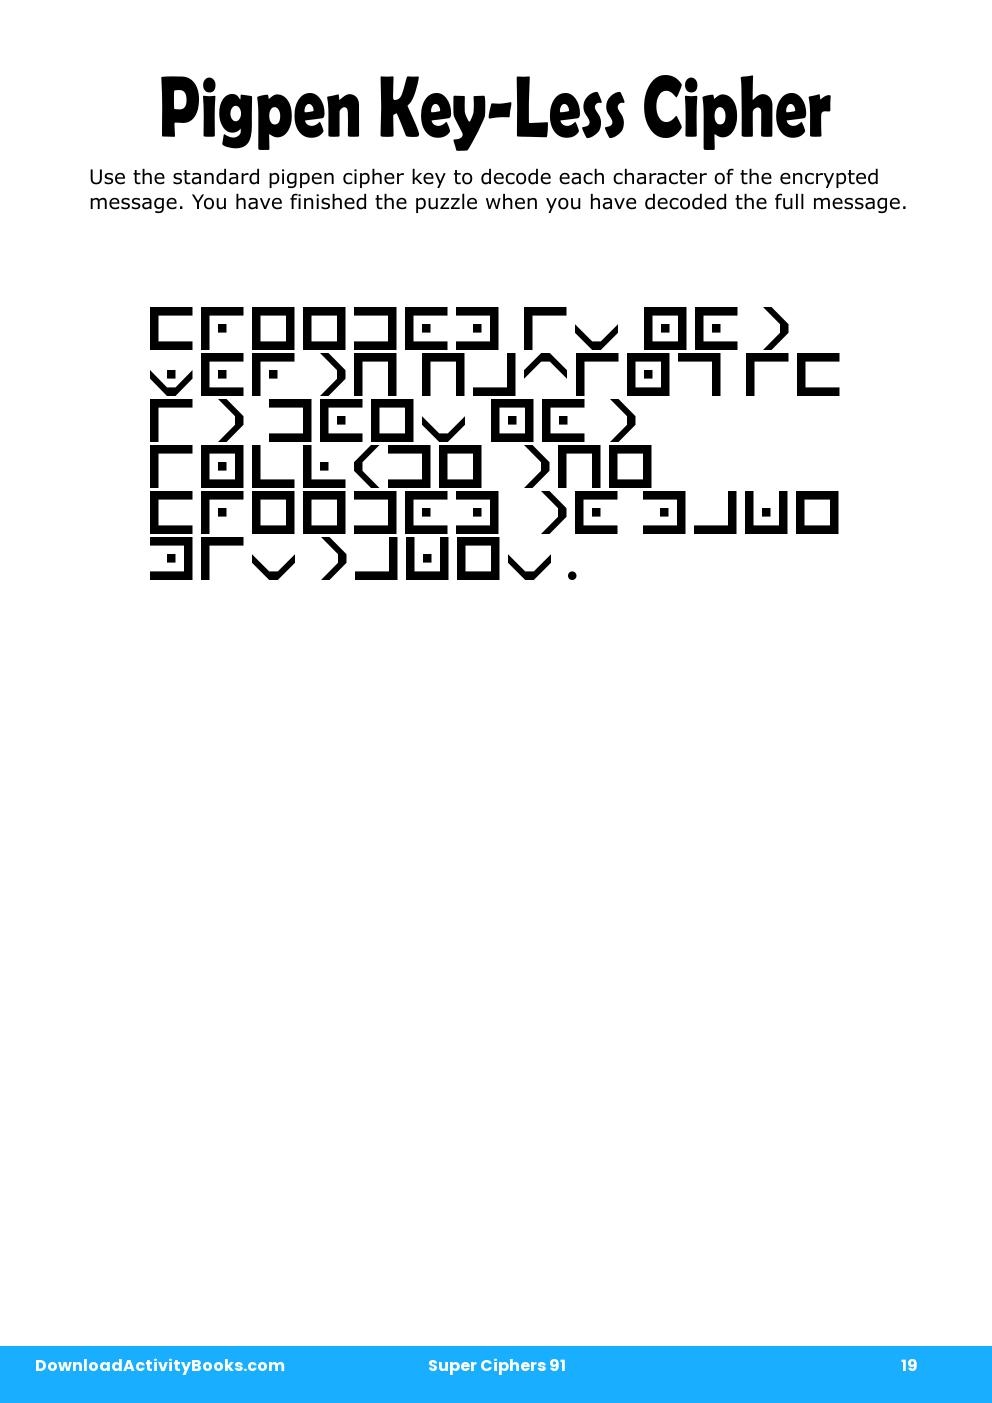 Pigpen Cipher in Super Ciphers 91